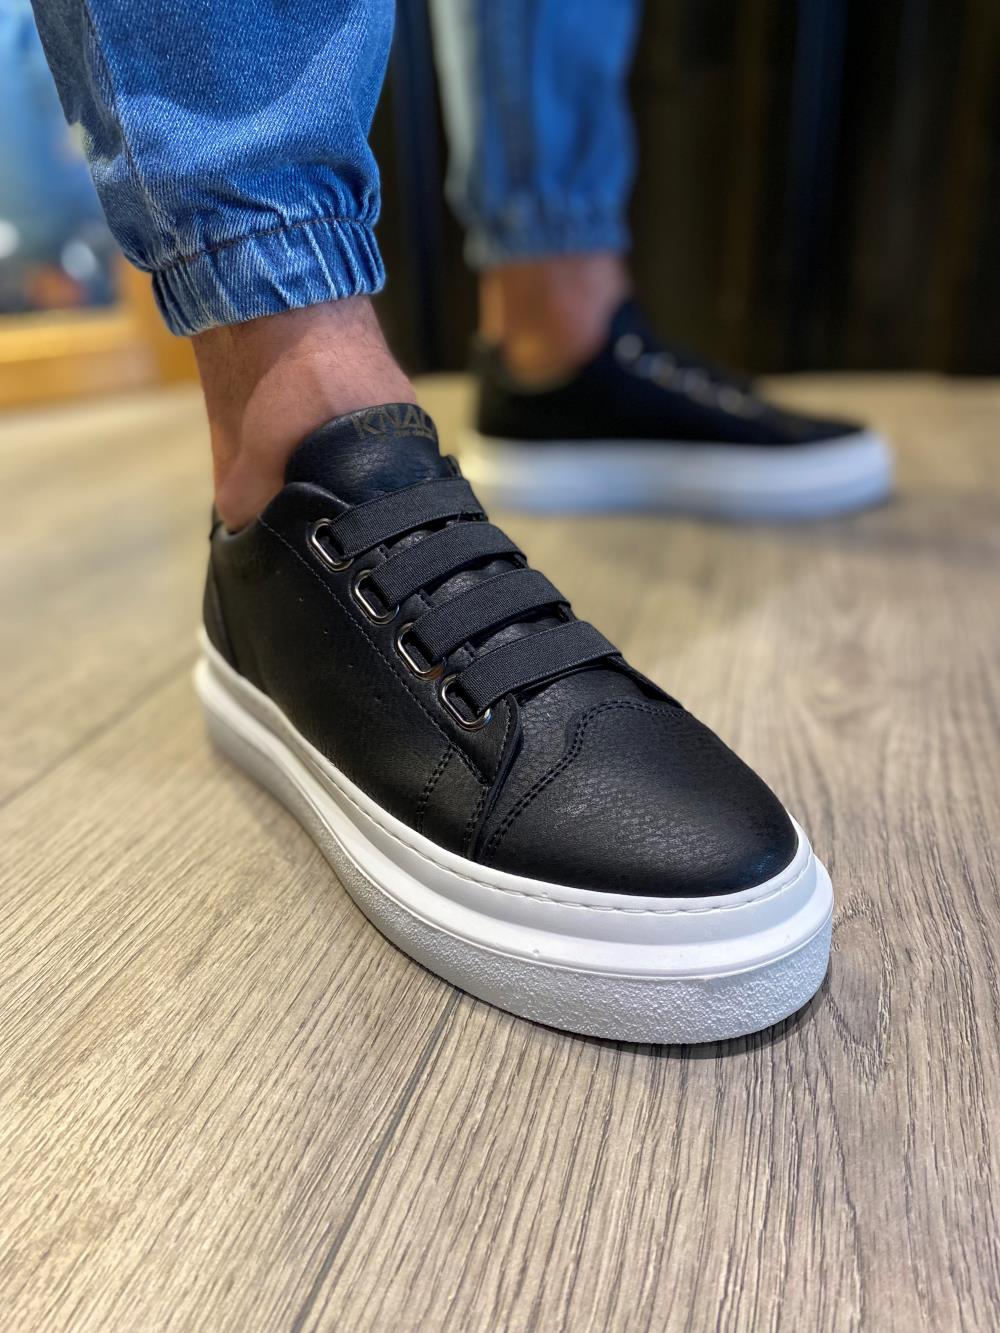 Herren Casual Sneakers Schuhe 521 Schwarz (Weiße Sohle)